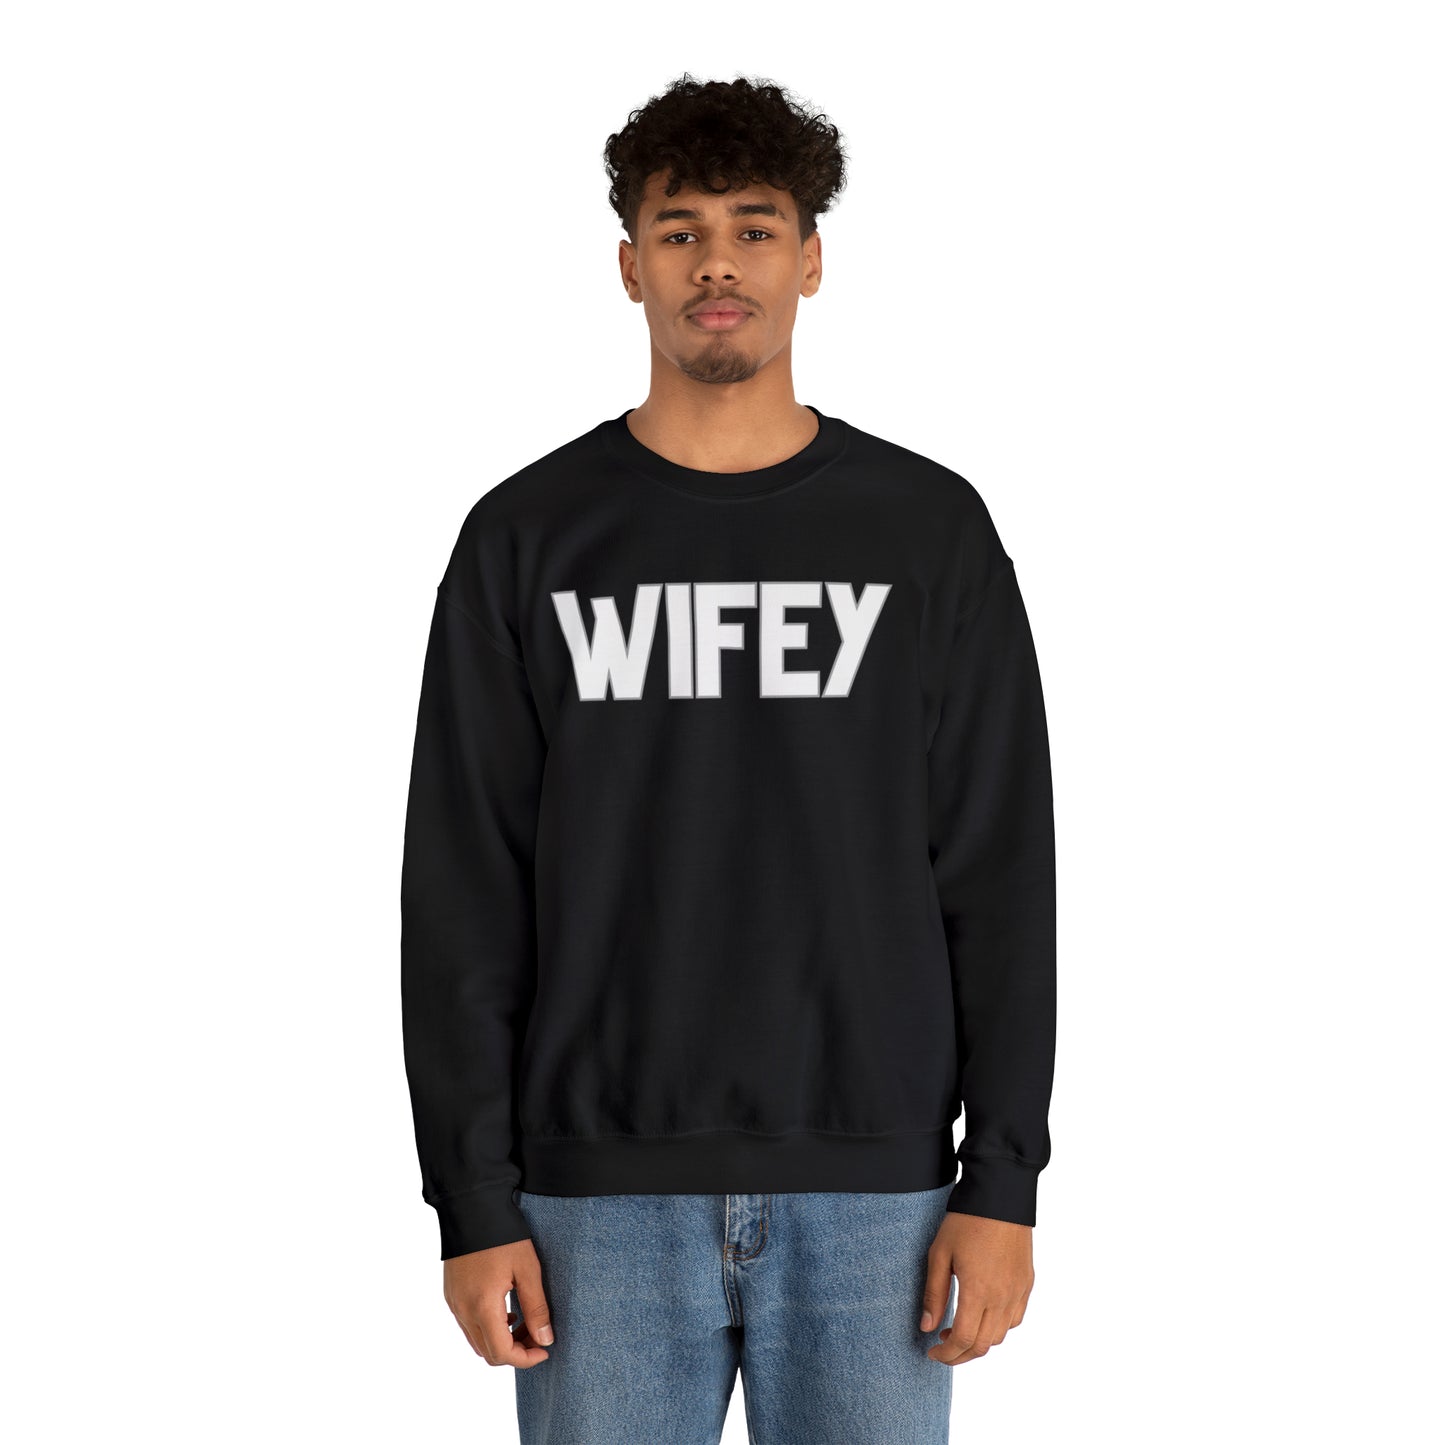 Wifey Unisex Heavy Blend Crewneck Sweatshirt